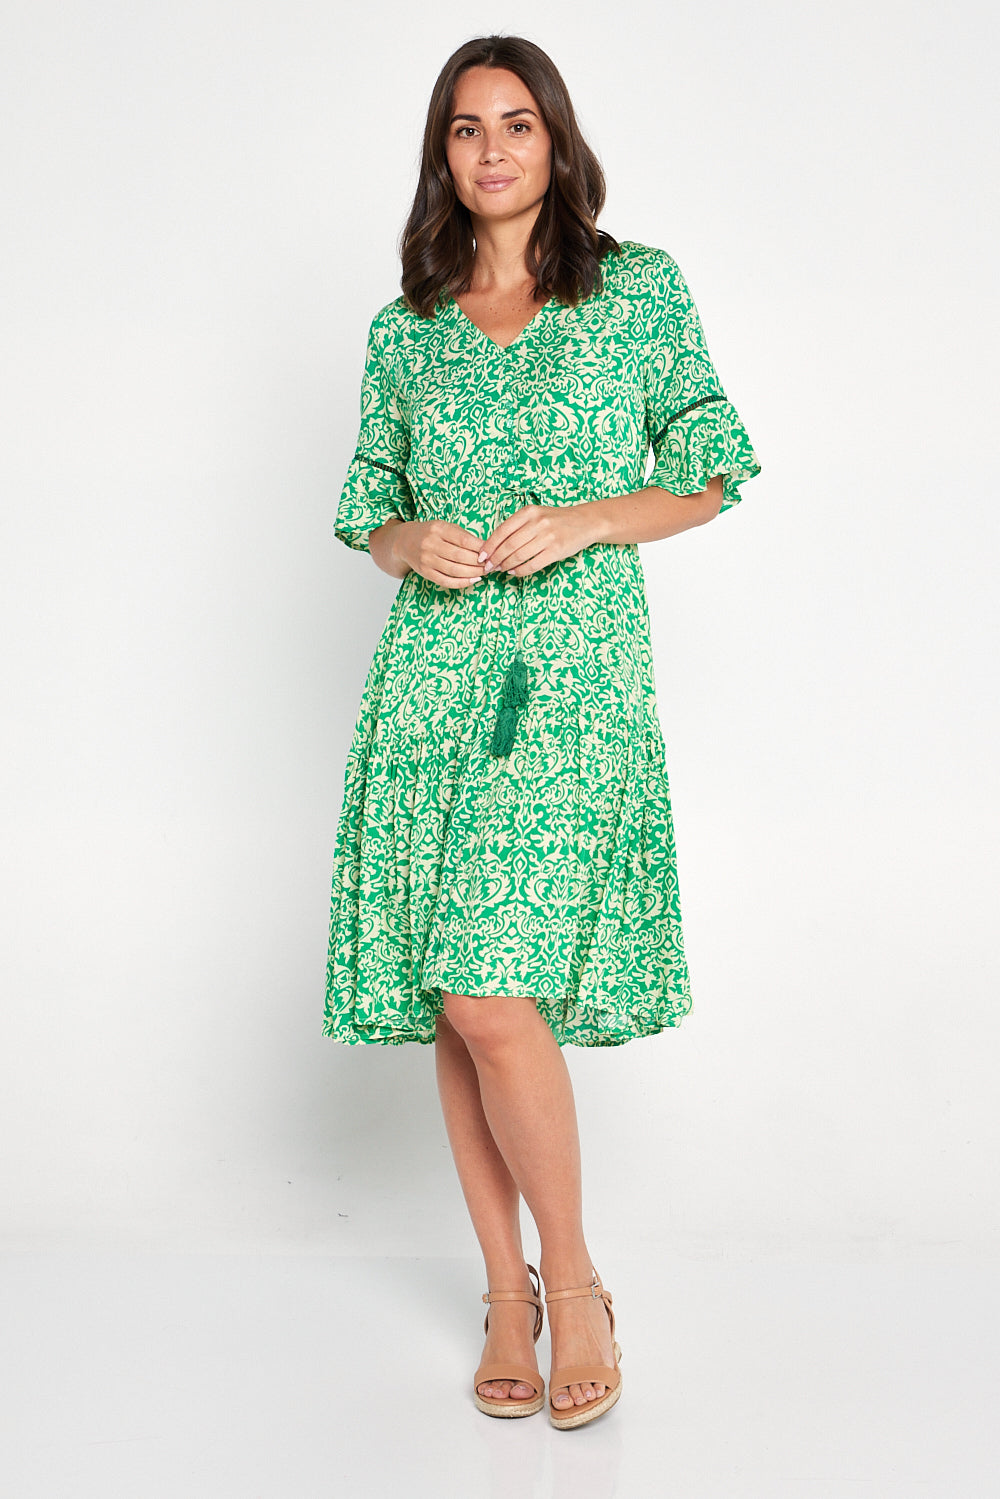 Estella Dress - Green Damask Print